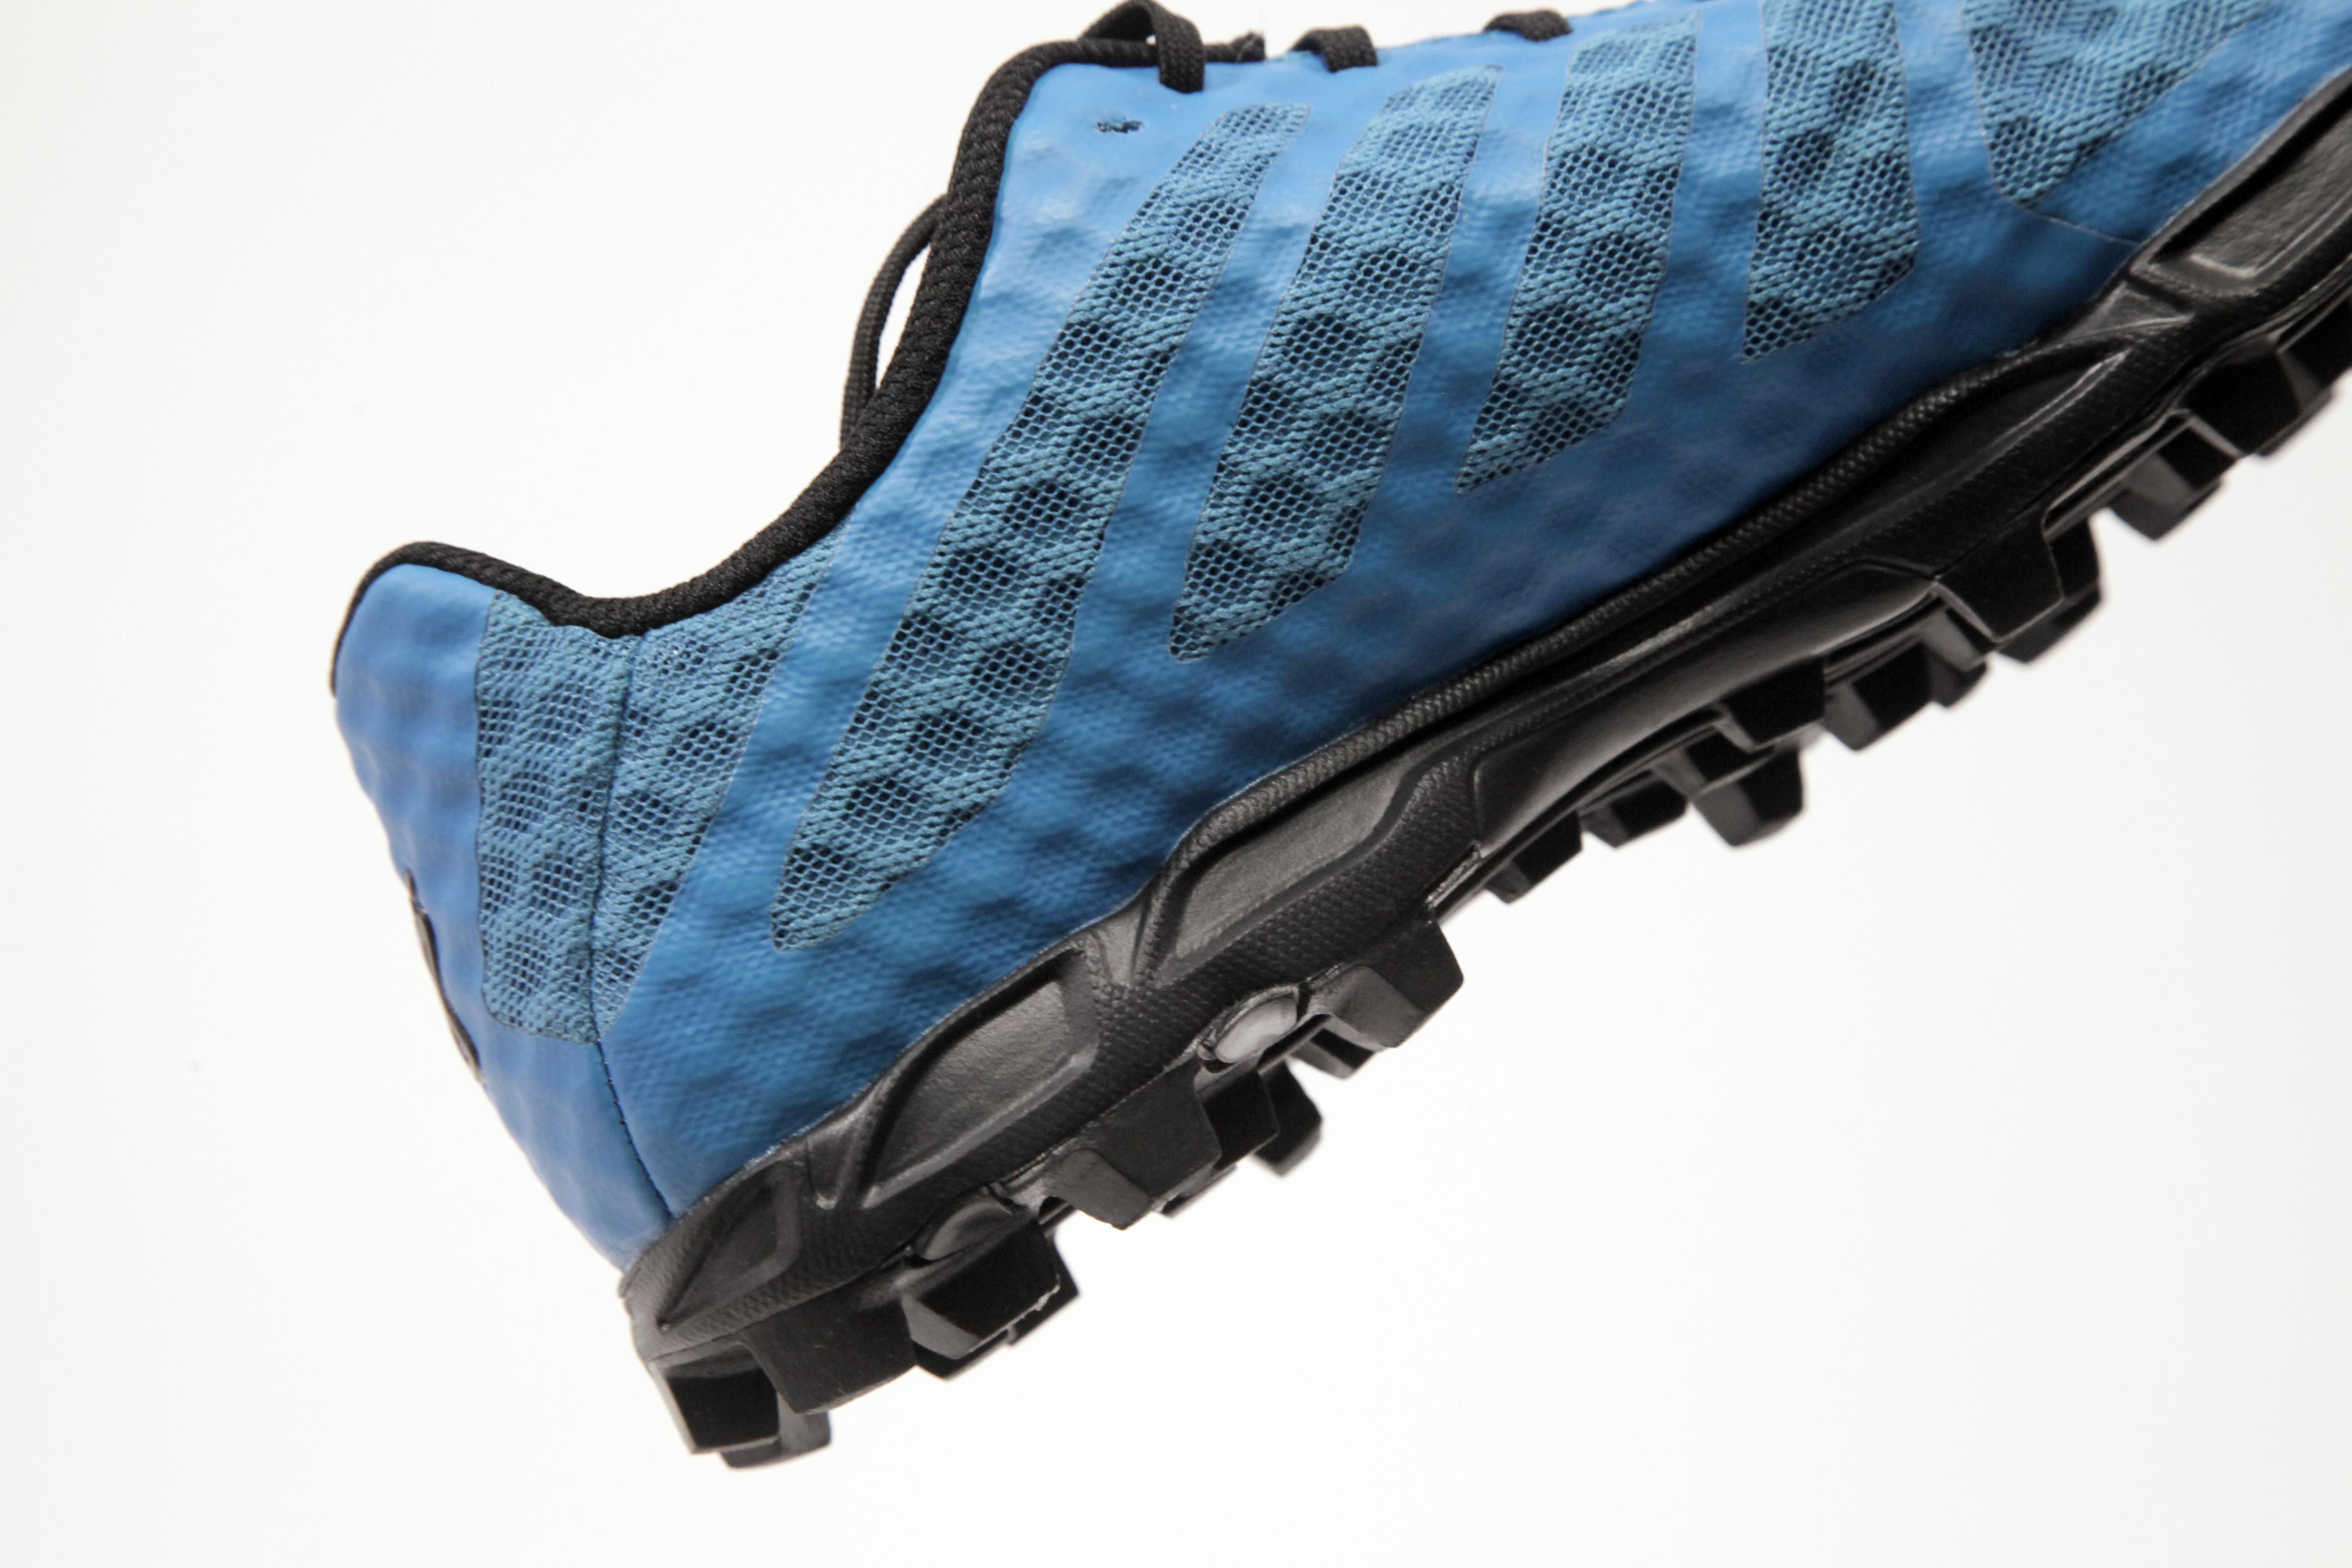 OCR Shoes Trail Running 10.5 Narrow Details about   Inov-8 Mens X-Talon G 210 Blue/Black